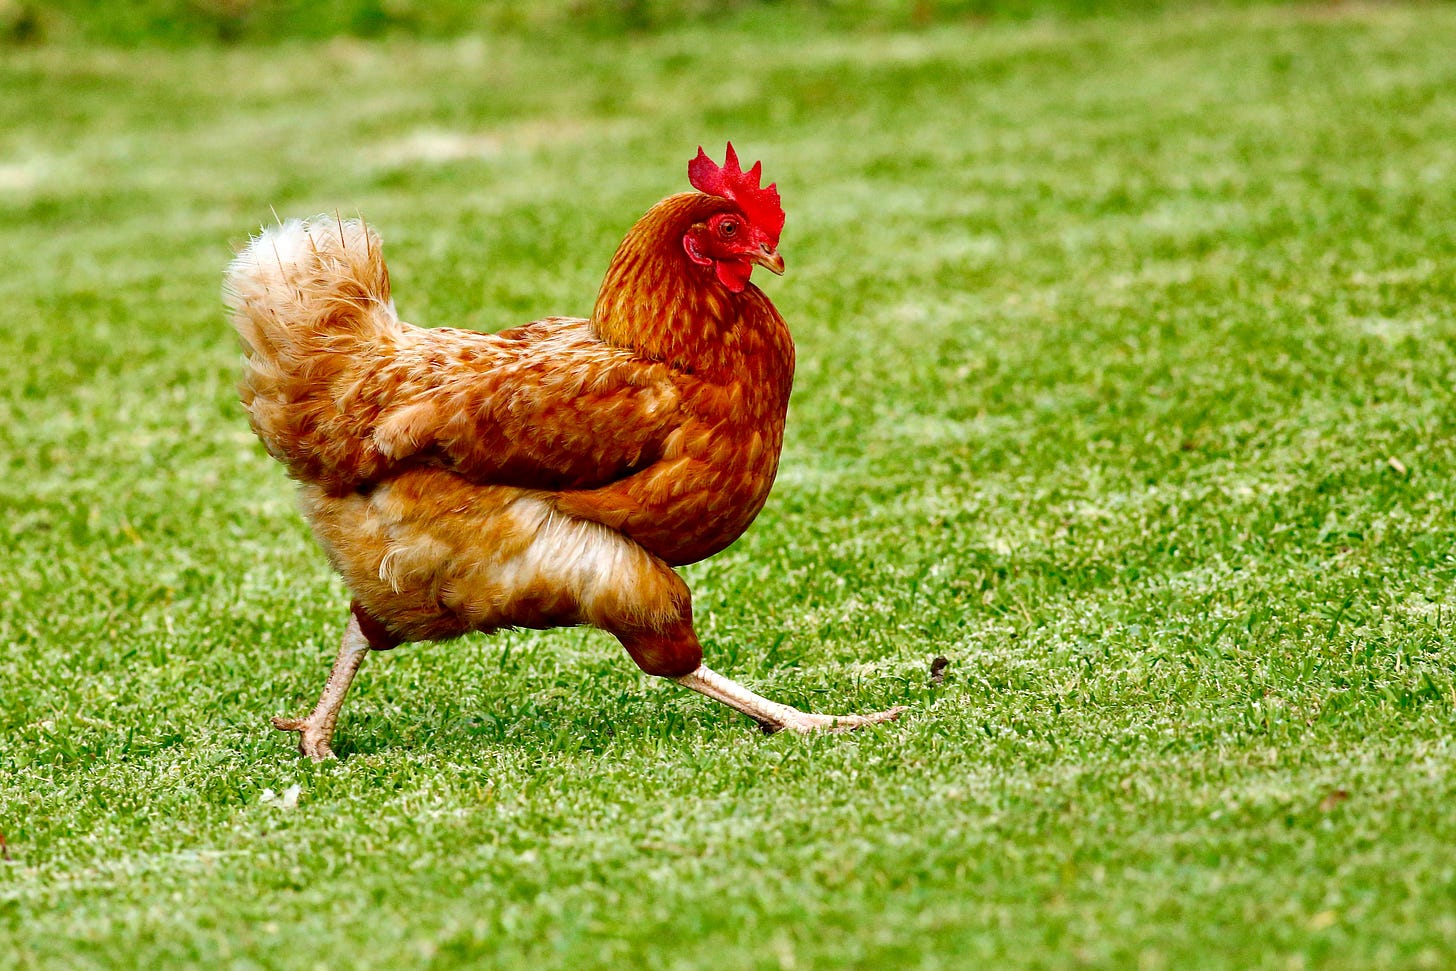 A chicken making a broad stride across grass